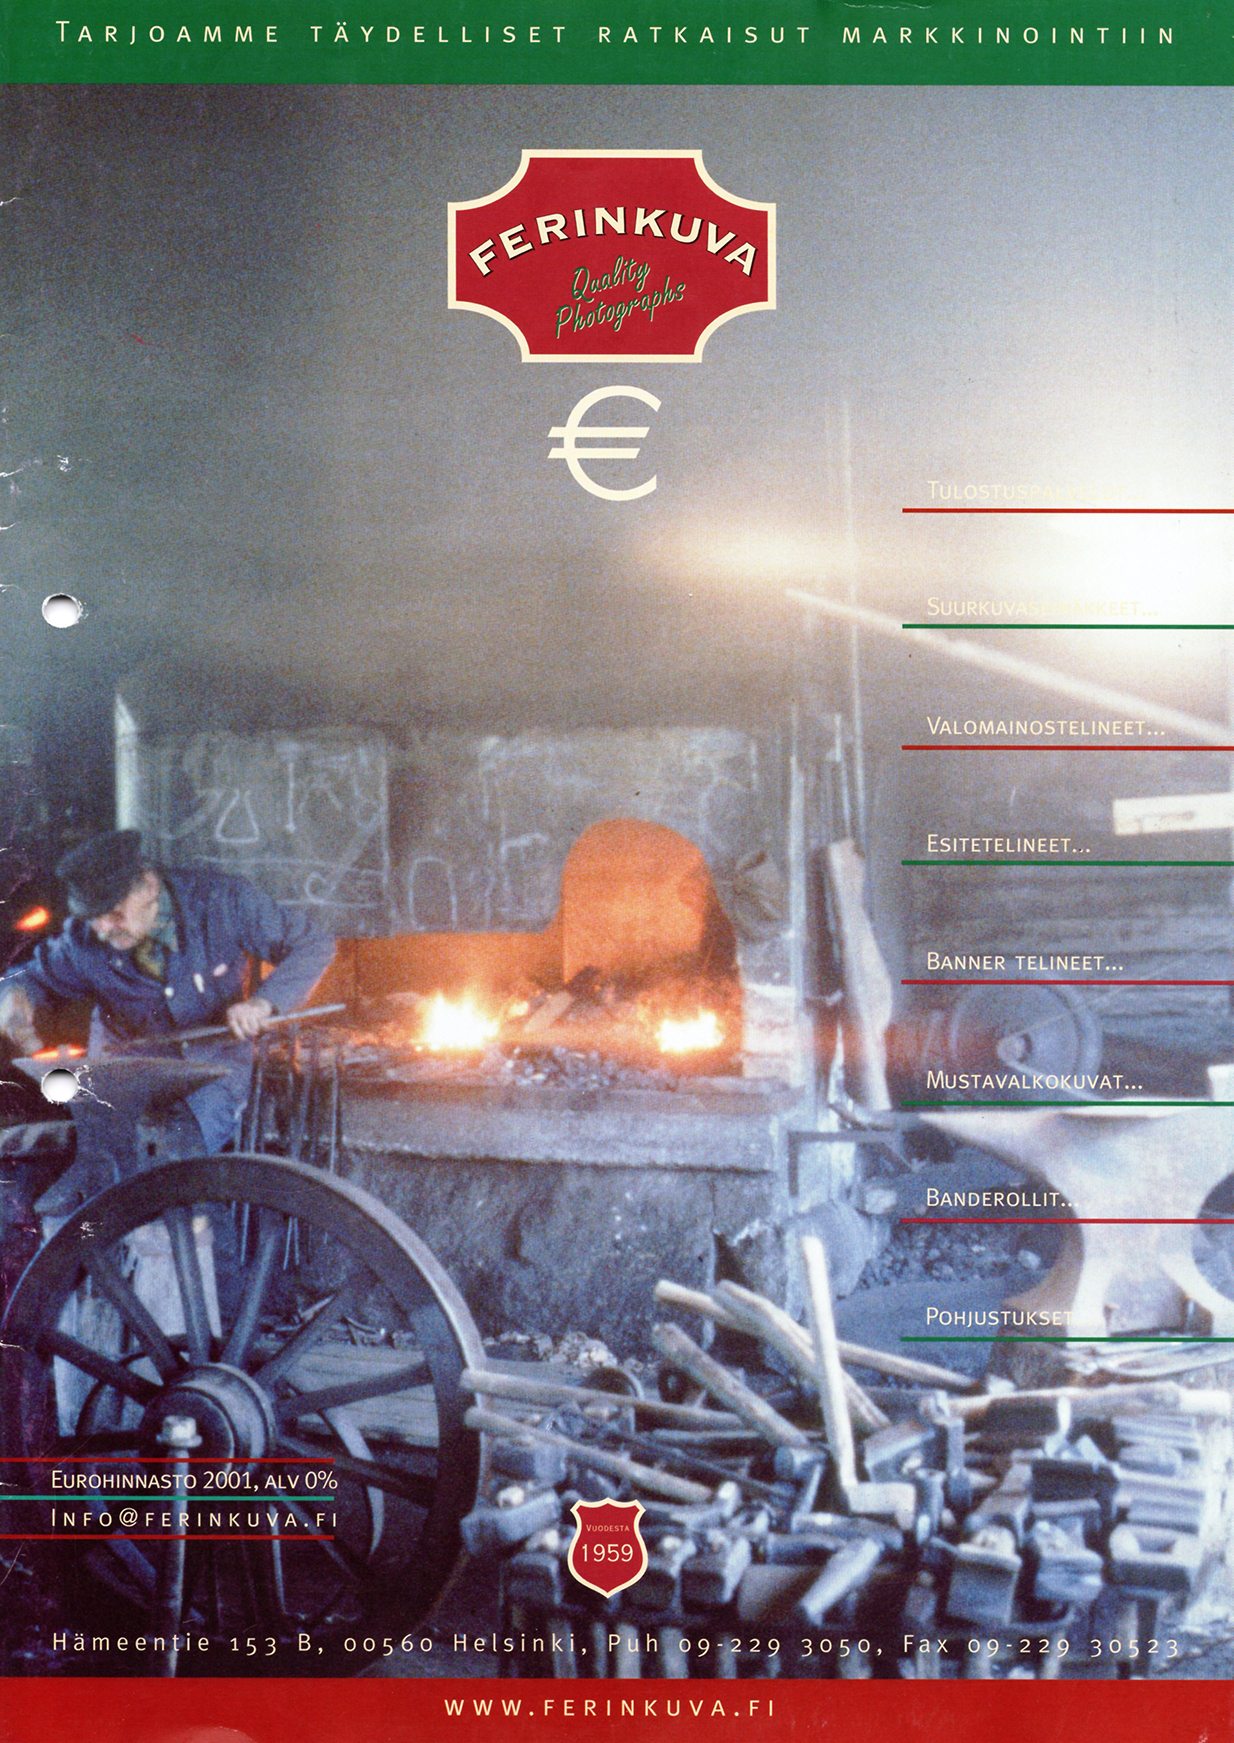 Euro aika vuonna 2001